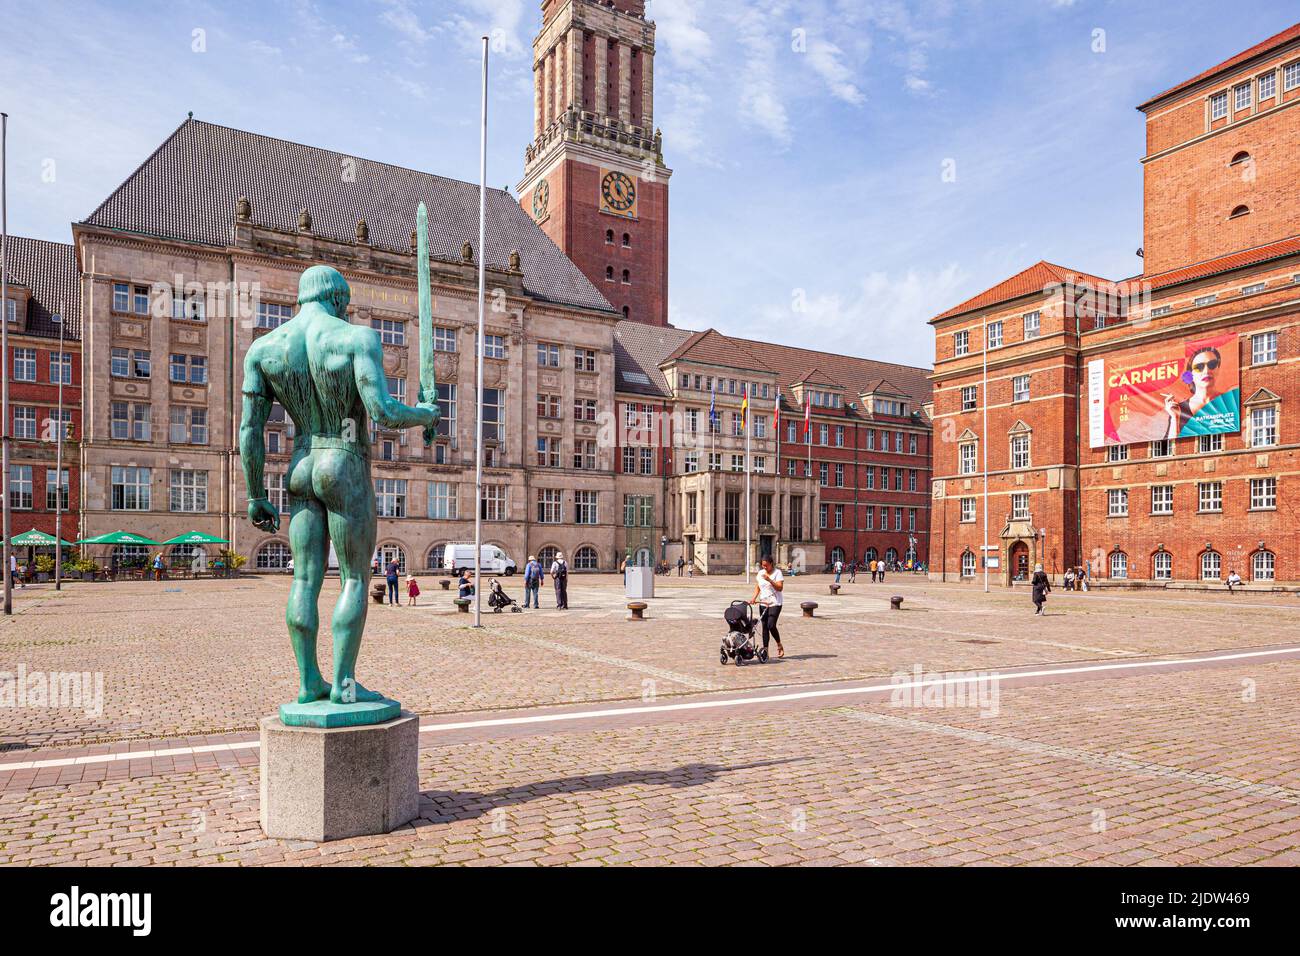 The statue of the Sword Bearer (Schwertträger) in Kieler Rathausplatz city square with the Town Hall (Landeshauptstadt) and Kiel Opera House Stock Photo